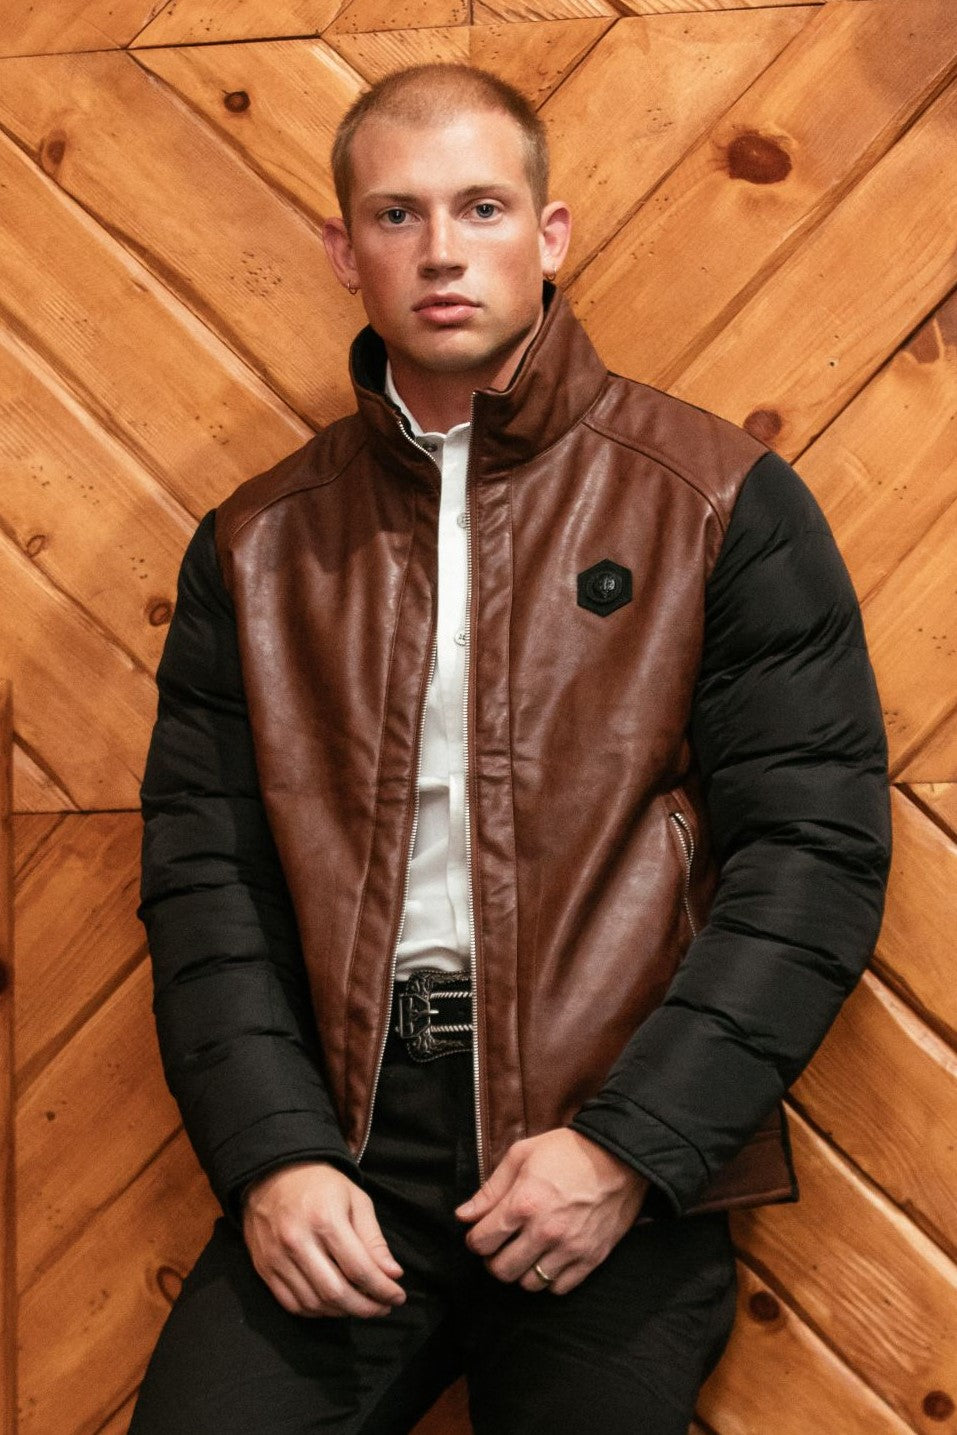 Camel Faux Leather Blazer – Edgy Fashion Boutique